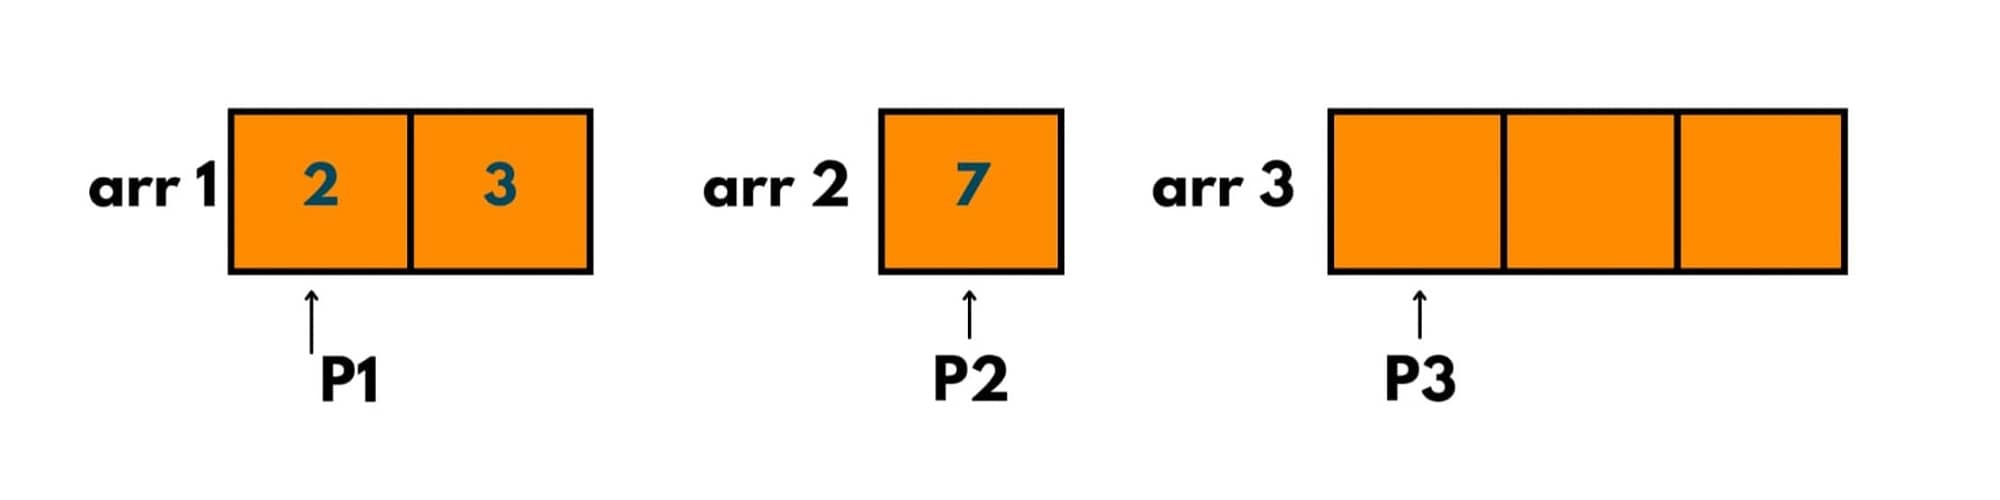 merge sort example 8